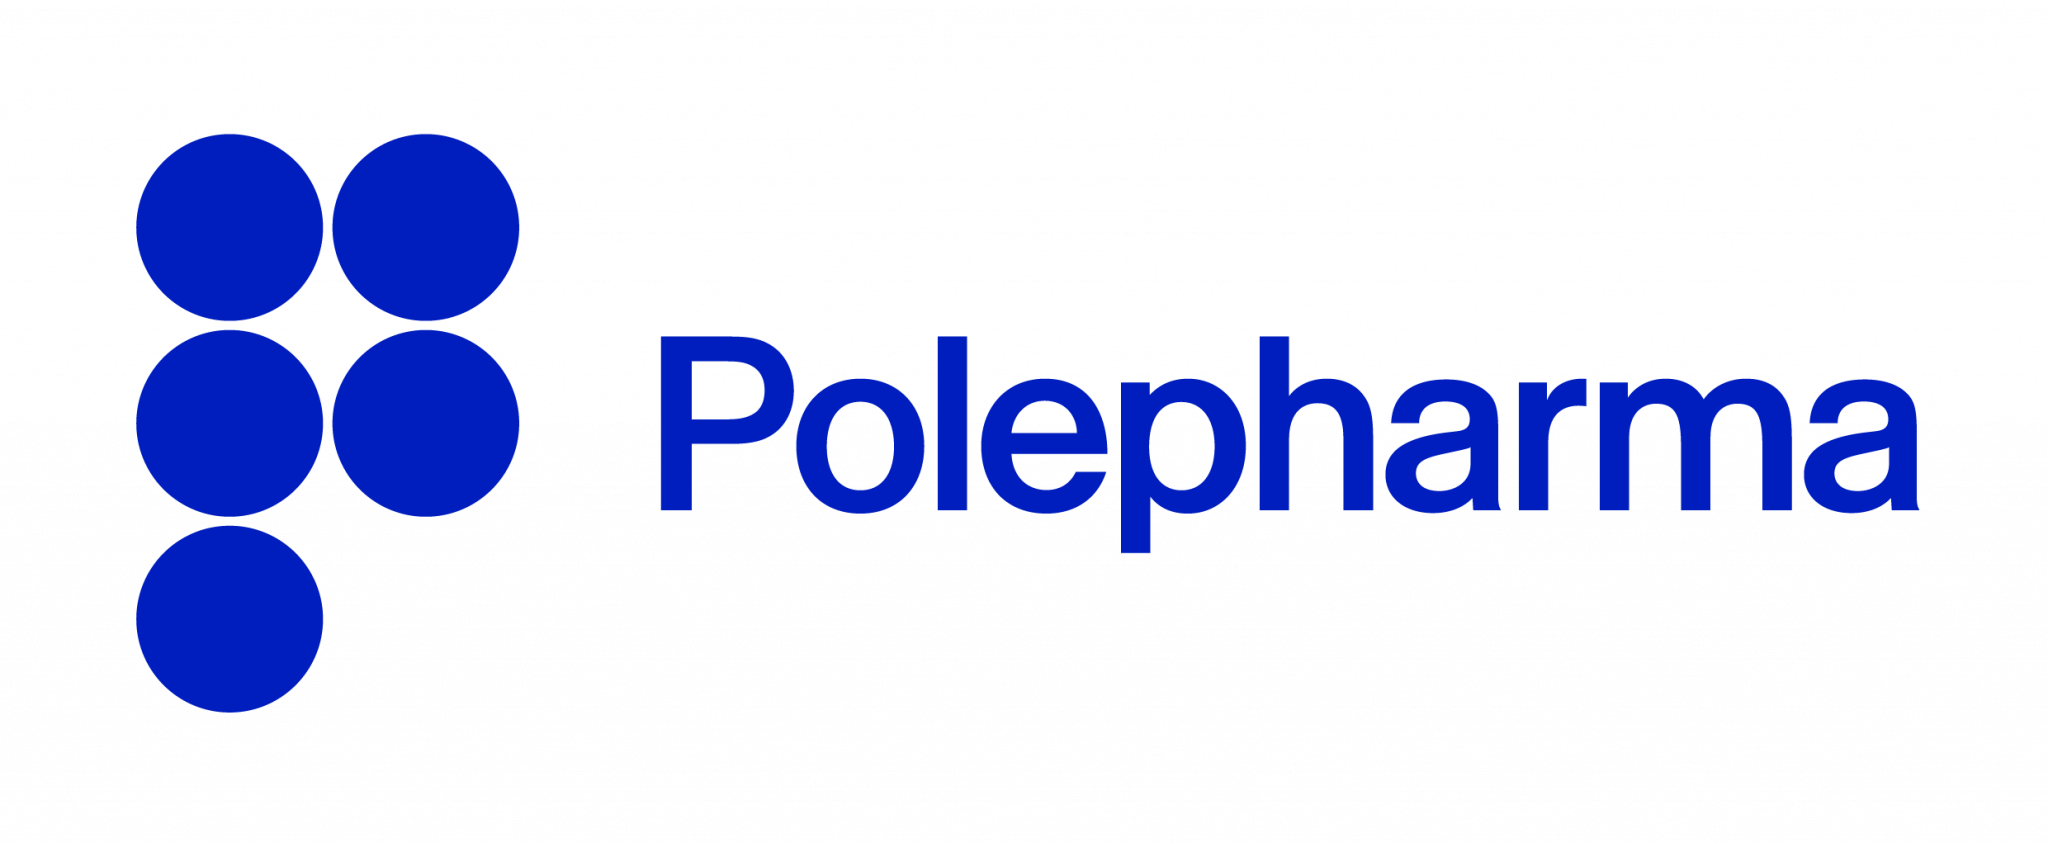 PolePharma Logo